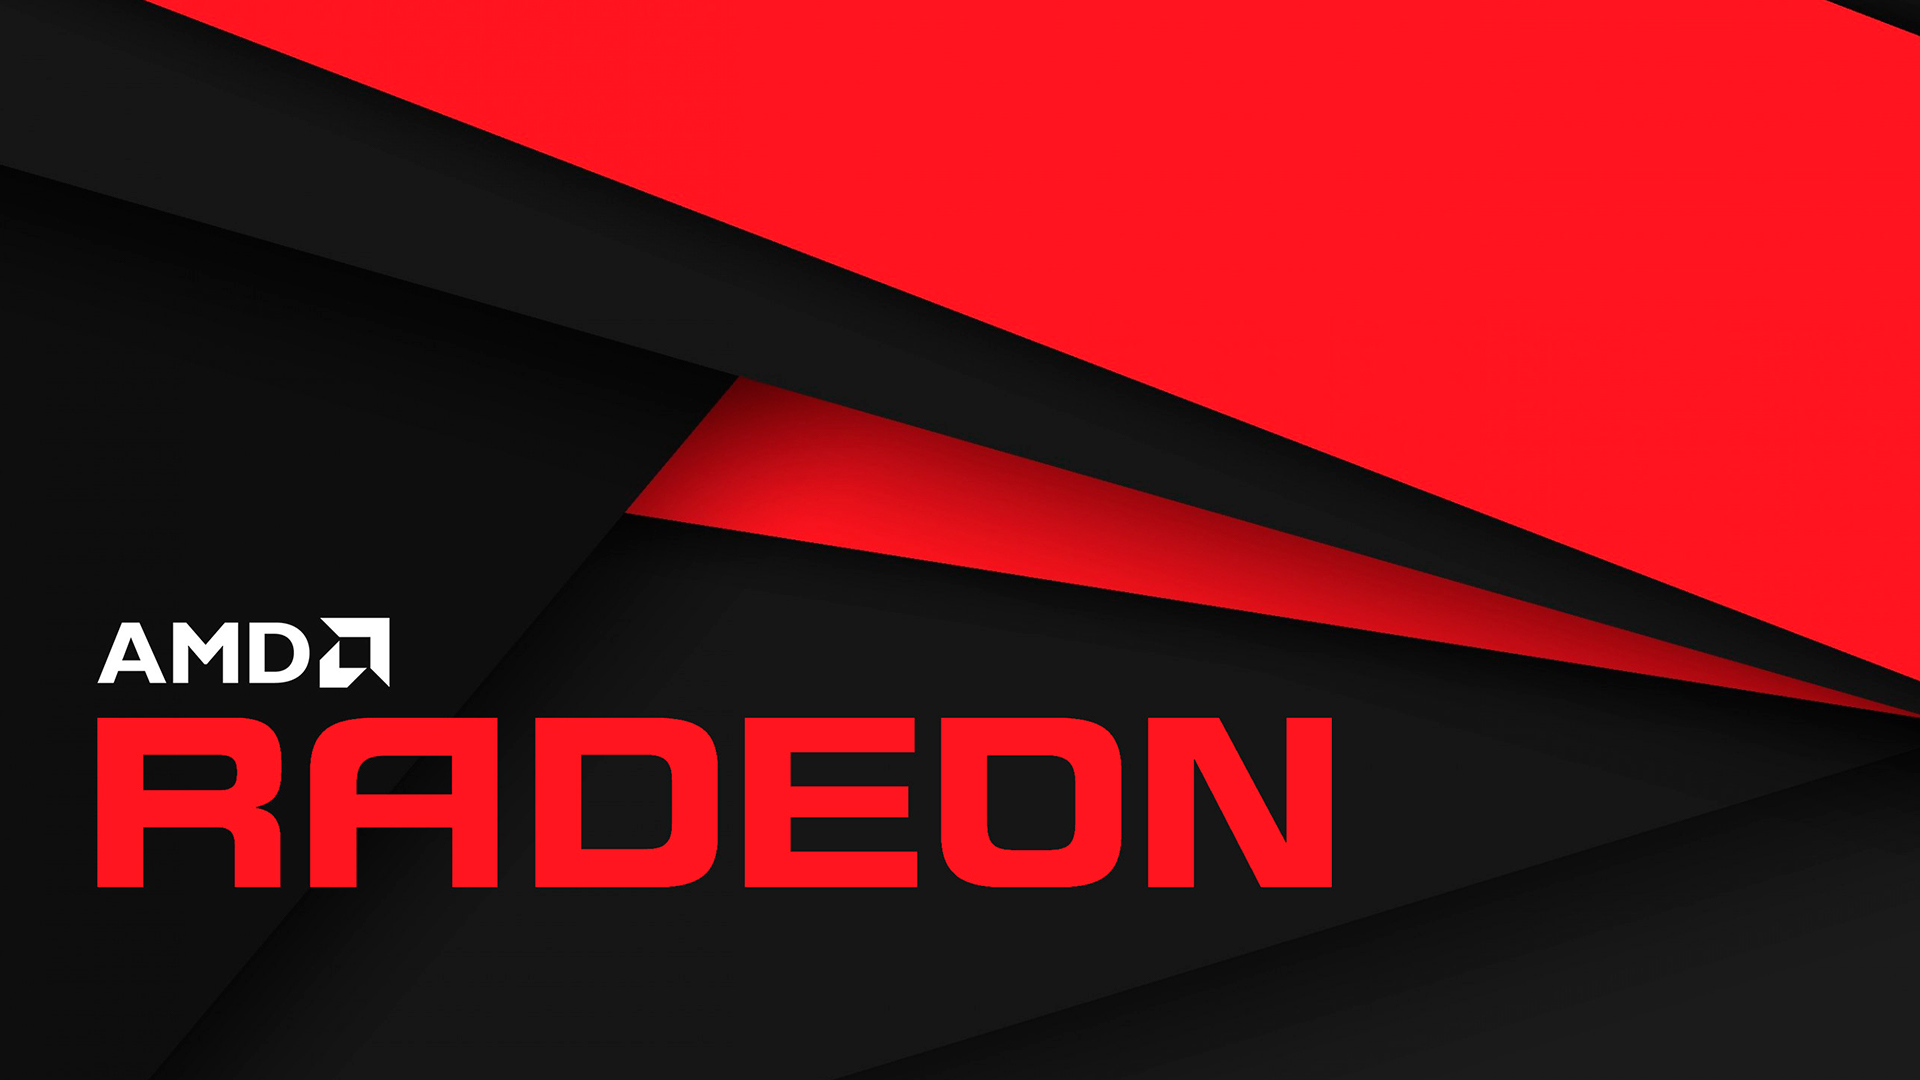 Amd Radeon Wallpaper Themes10 Win